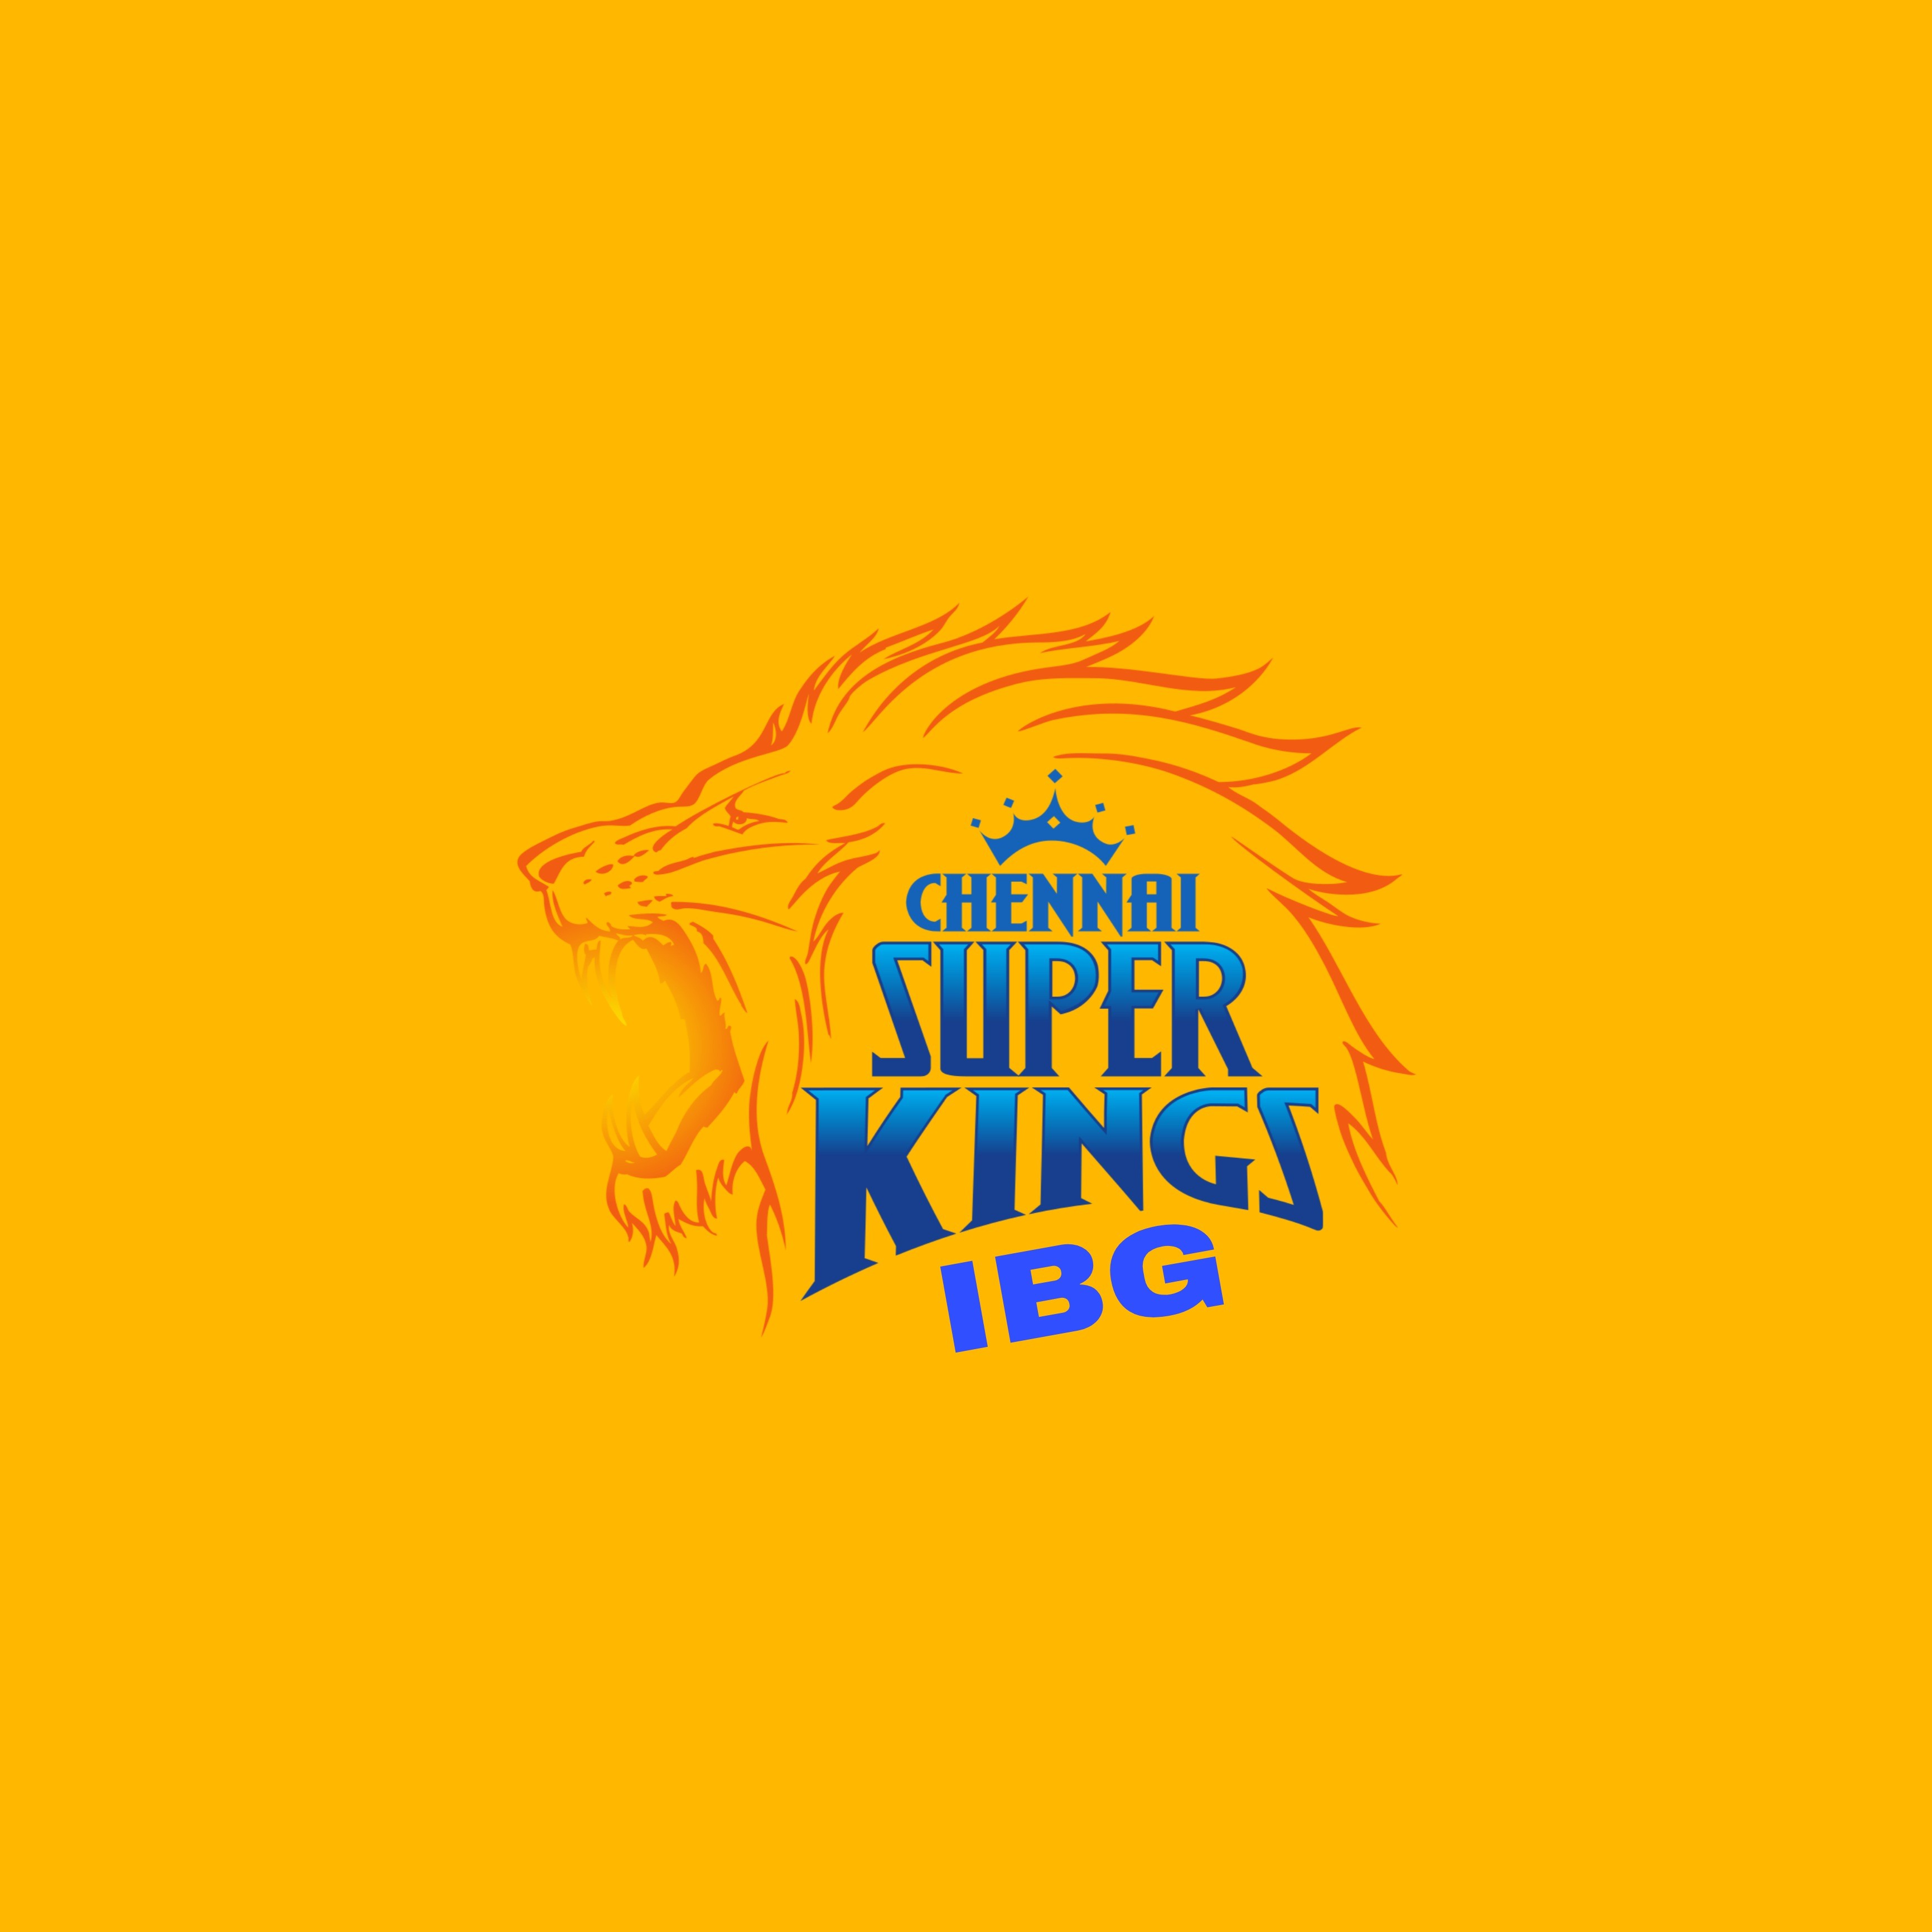 Chennai Super Kings IBG